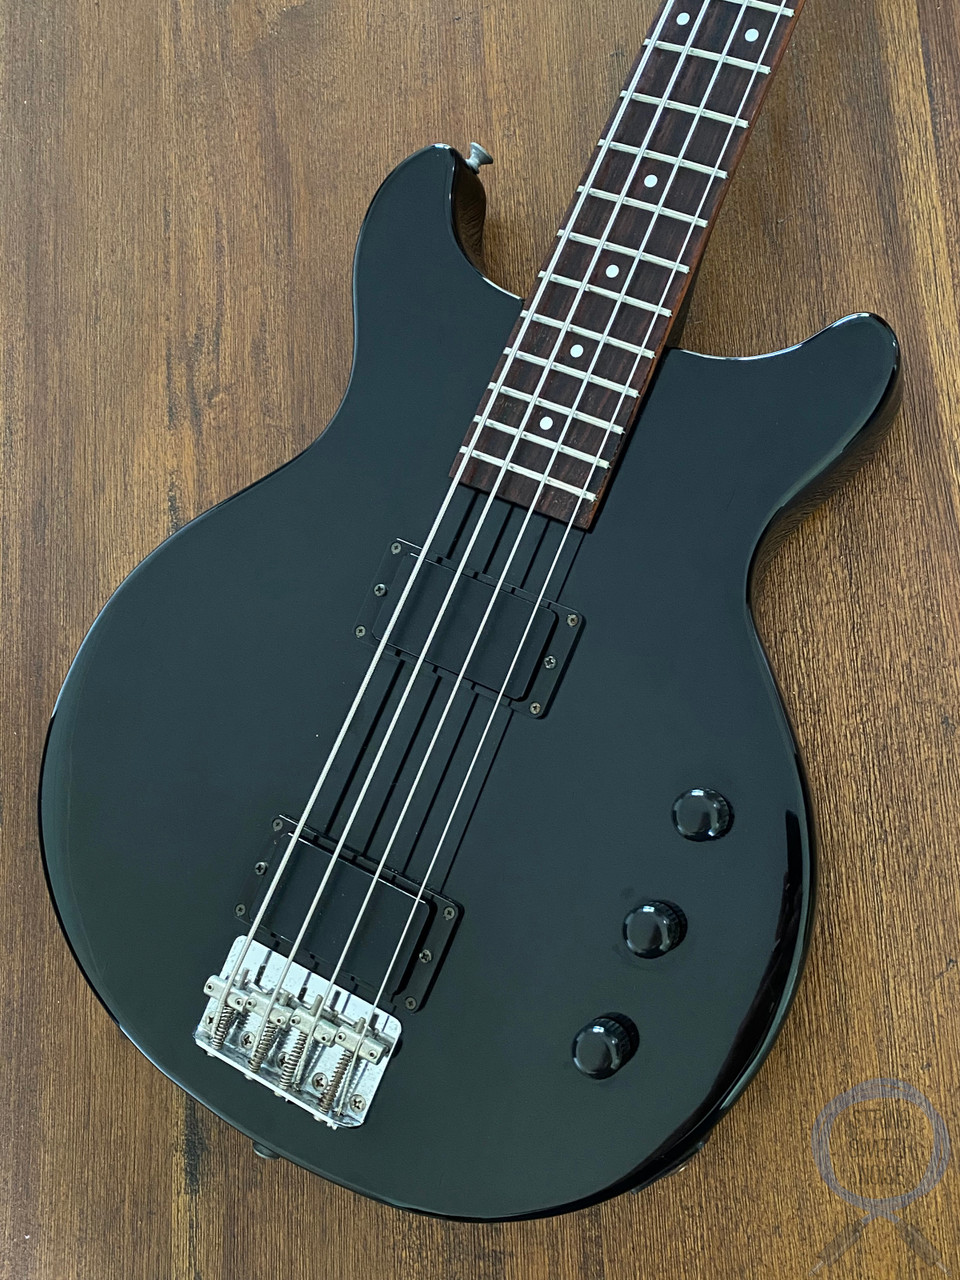 Greco Bass, TVB-45, Black, Made In Japan, 1990, Medium 32” Scale